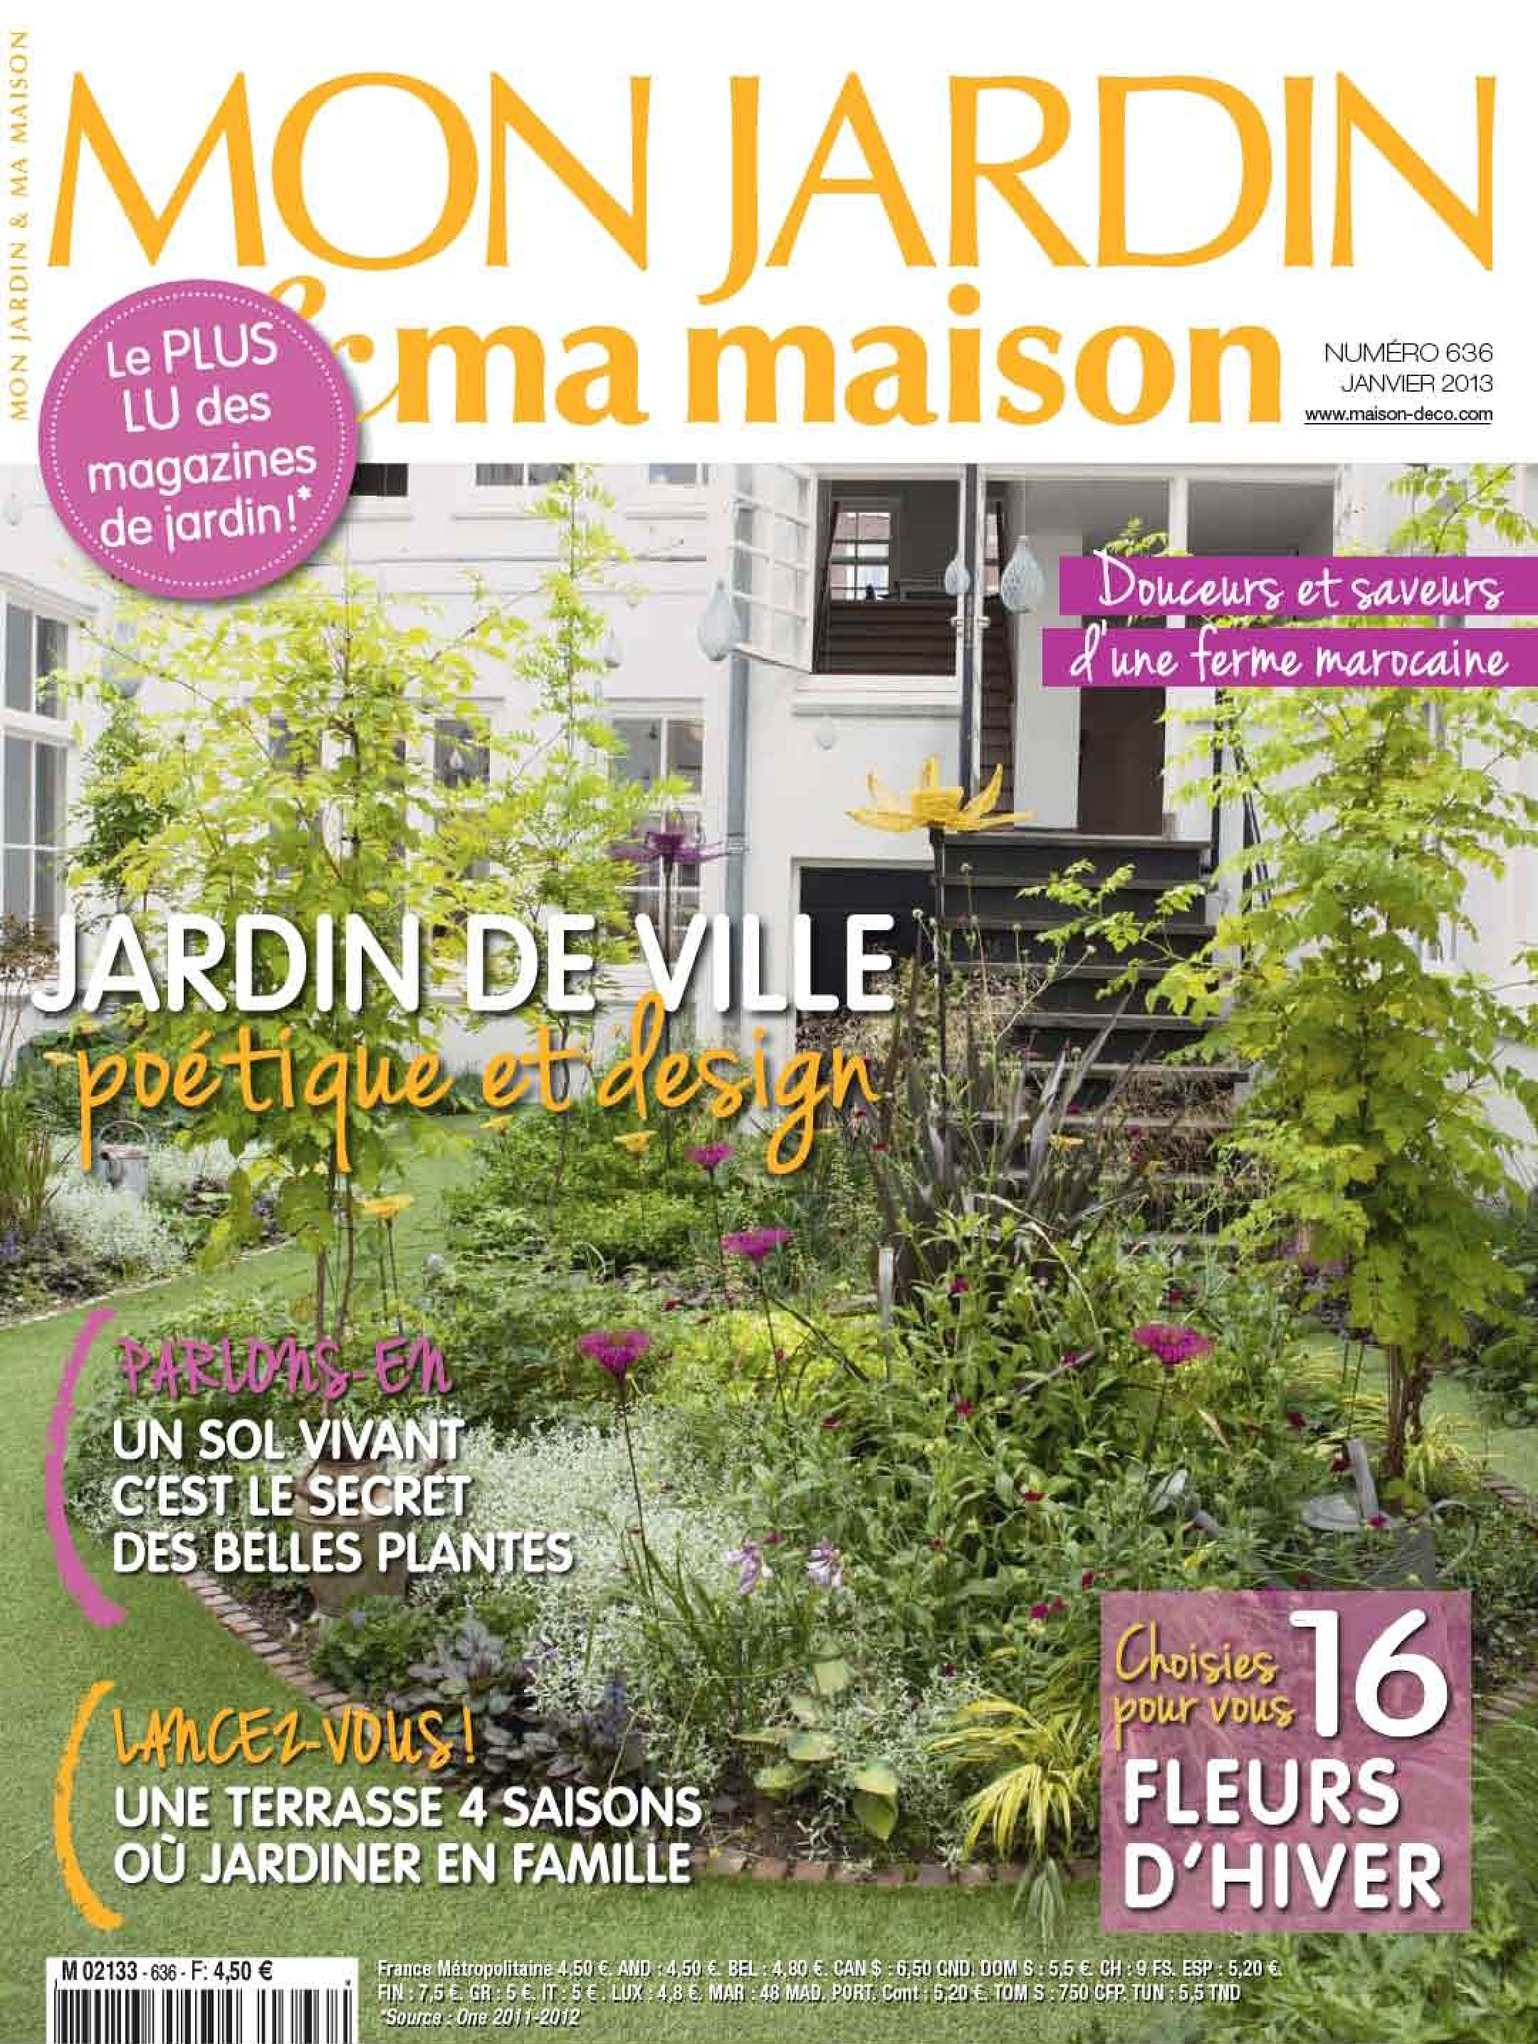 Calaméo - Jardin Droog Amsterdam Mon Jardin Ma Maison serapportantà Magazine Mon Jardin Et Ma Maison